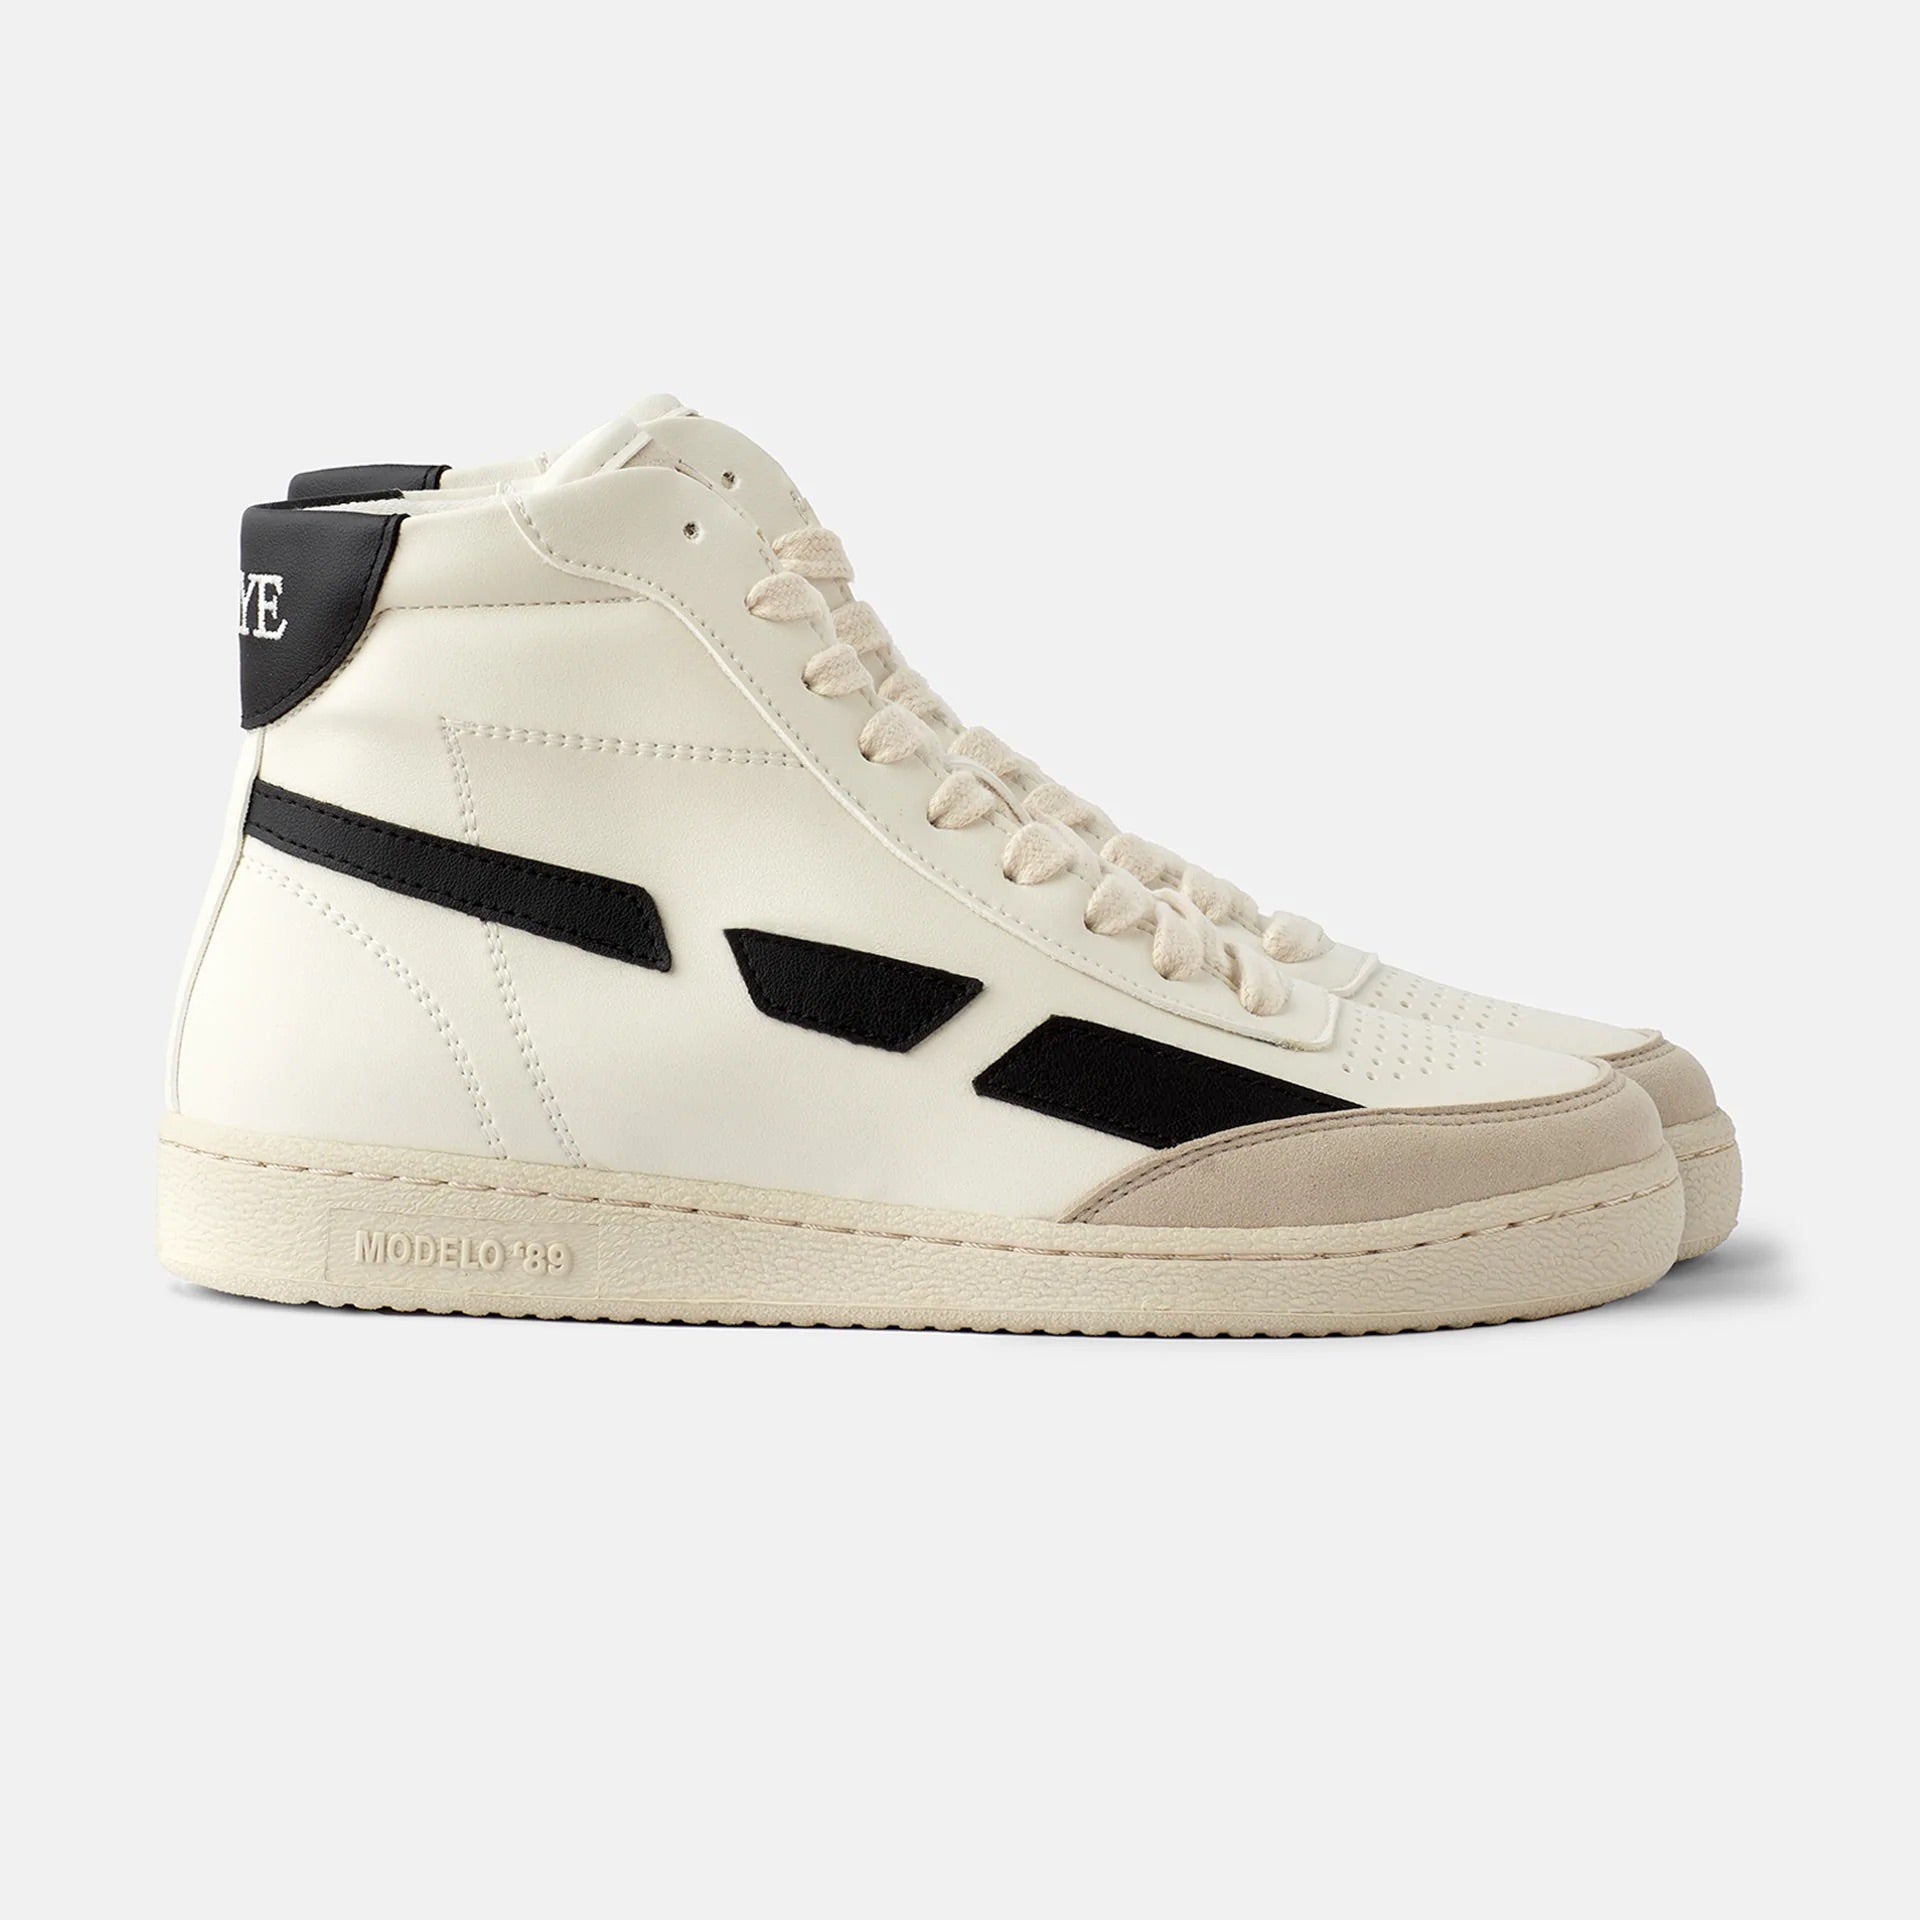 A SAYE Modelo '89 Hi Sneaker in white and black.